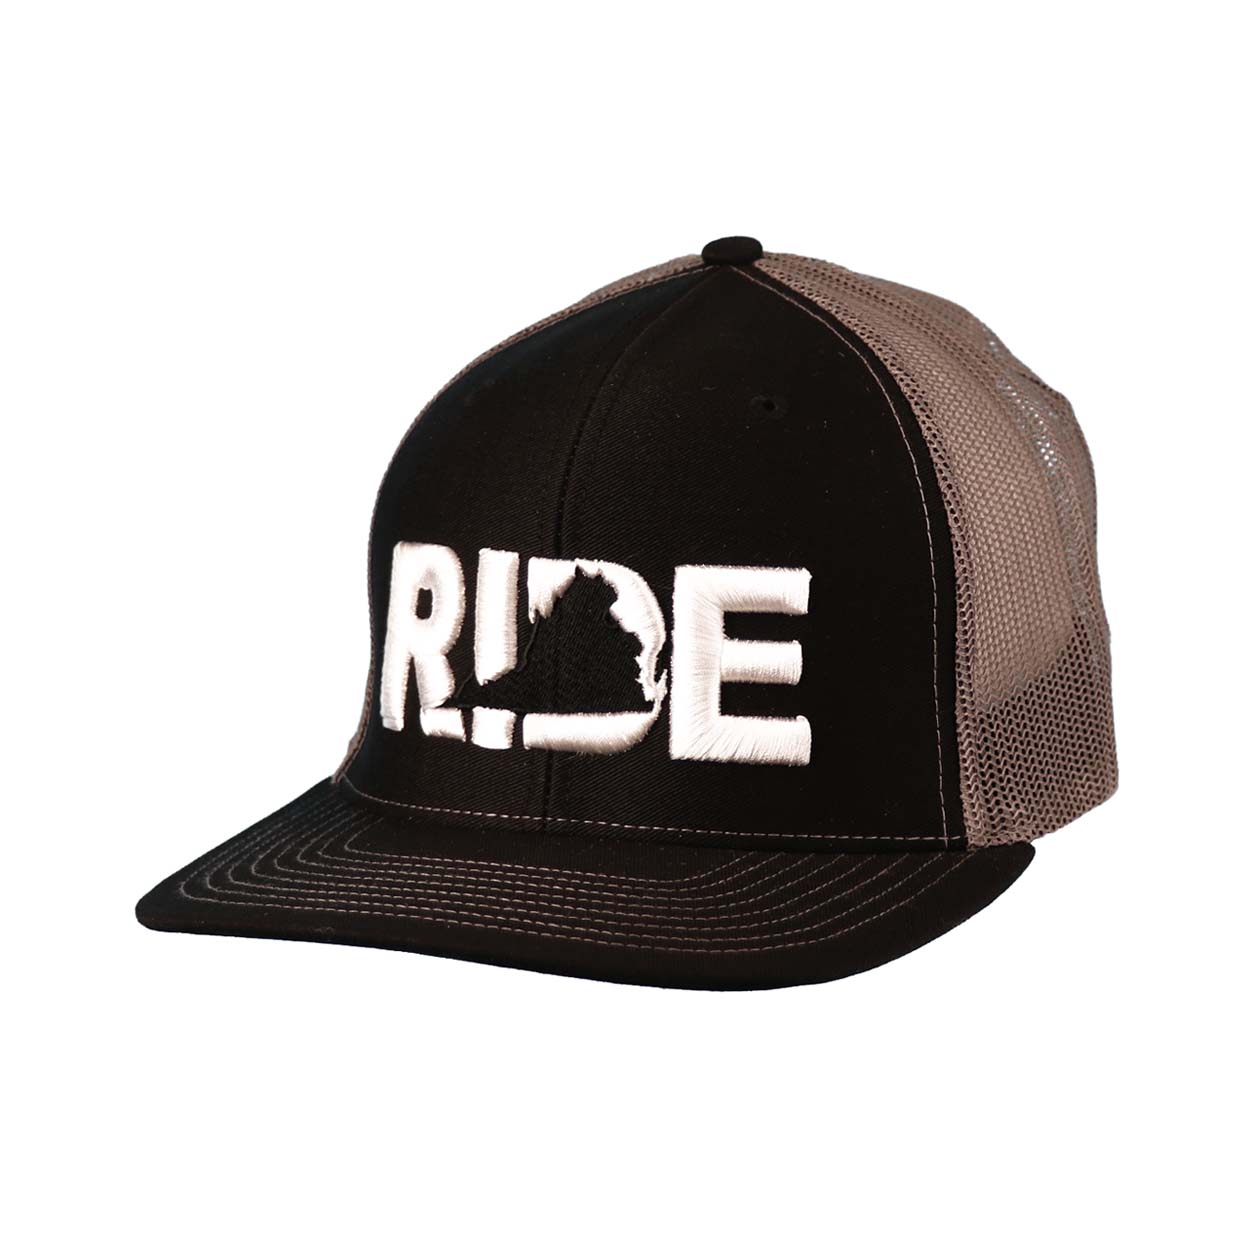 Ride Virginia Classic Embroidered Snapback Trucker Hat Black/Gray